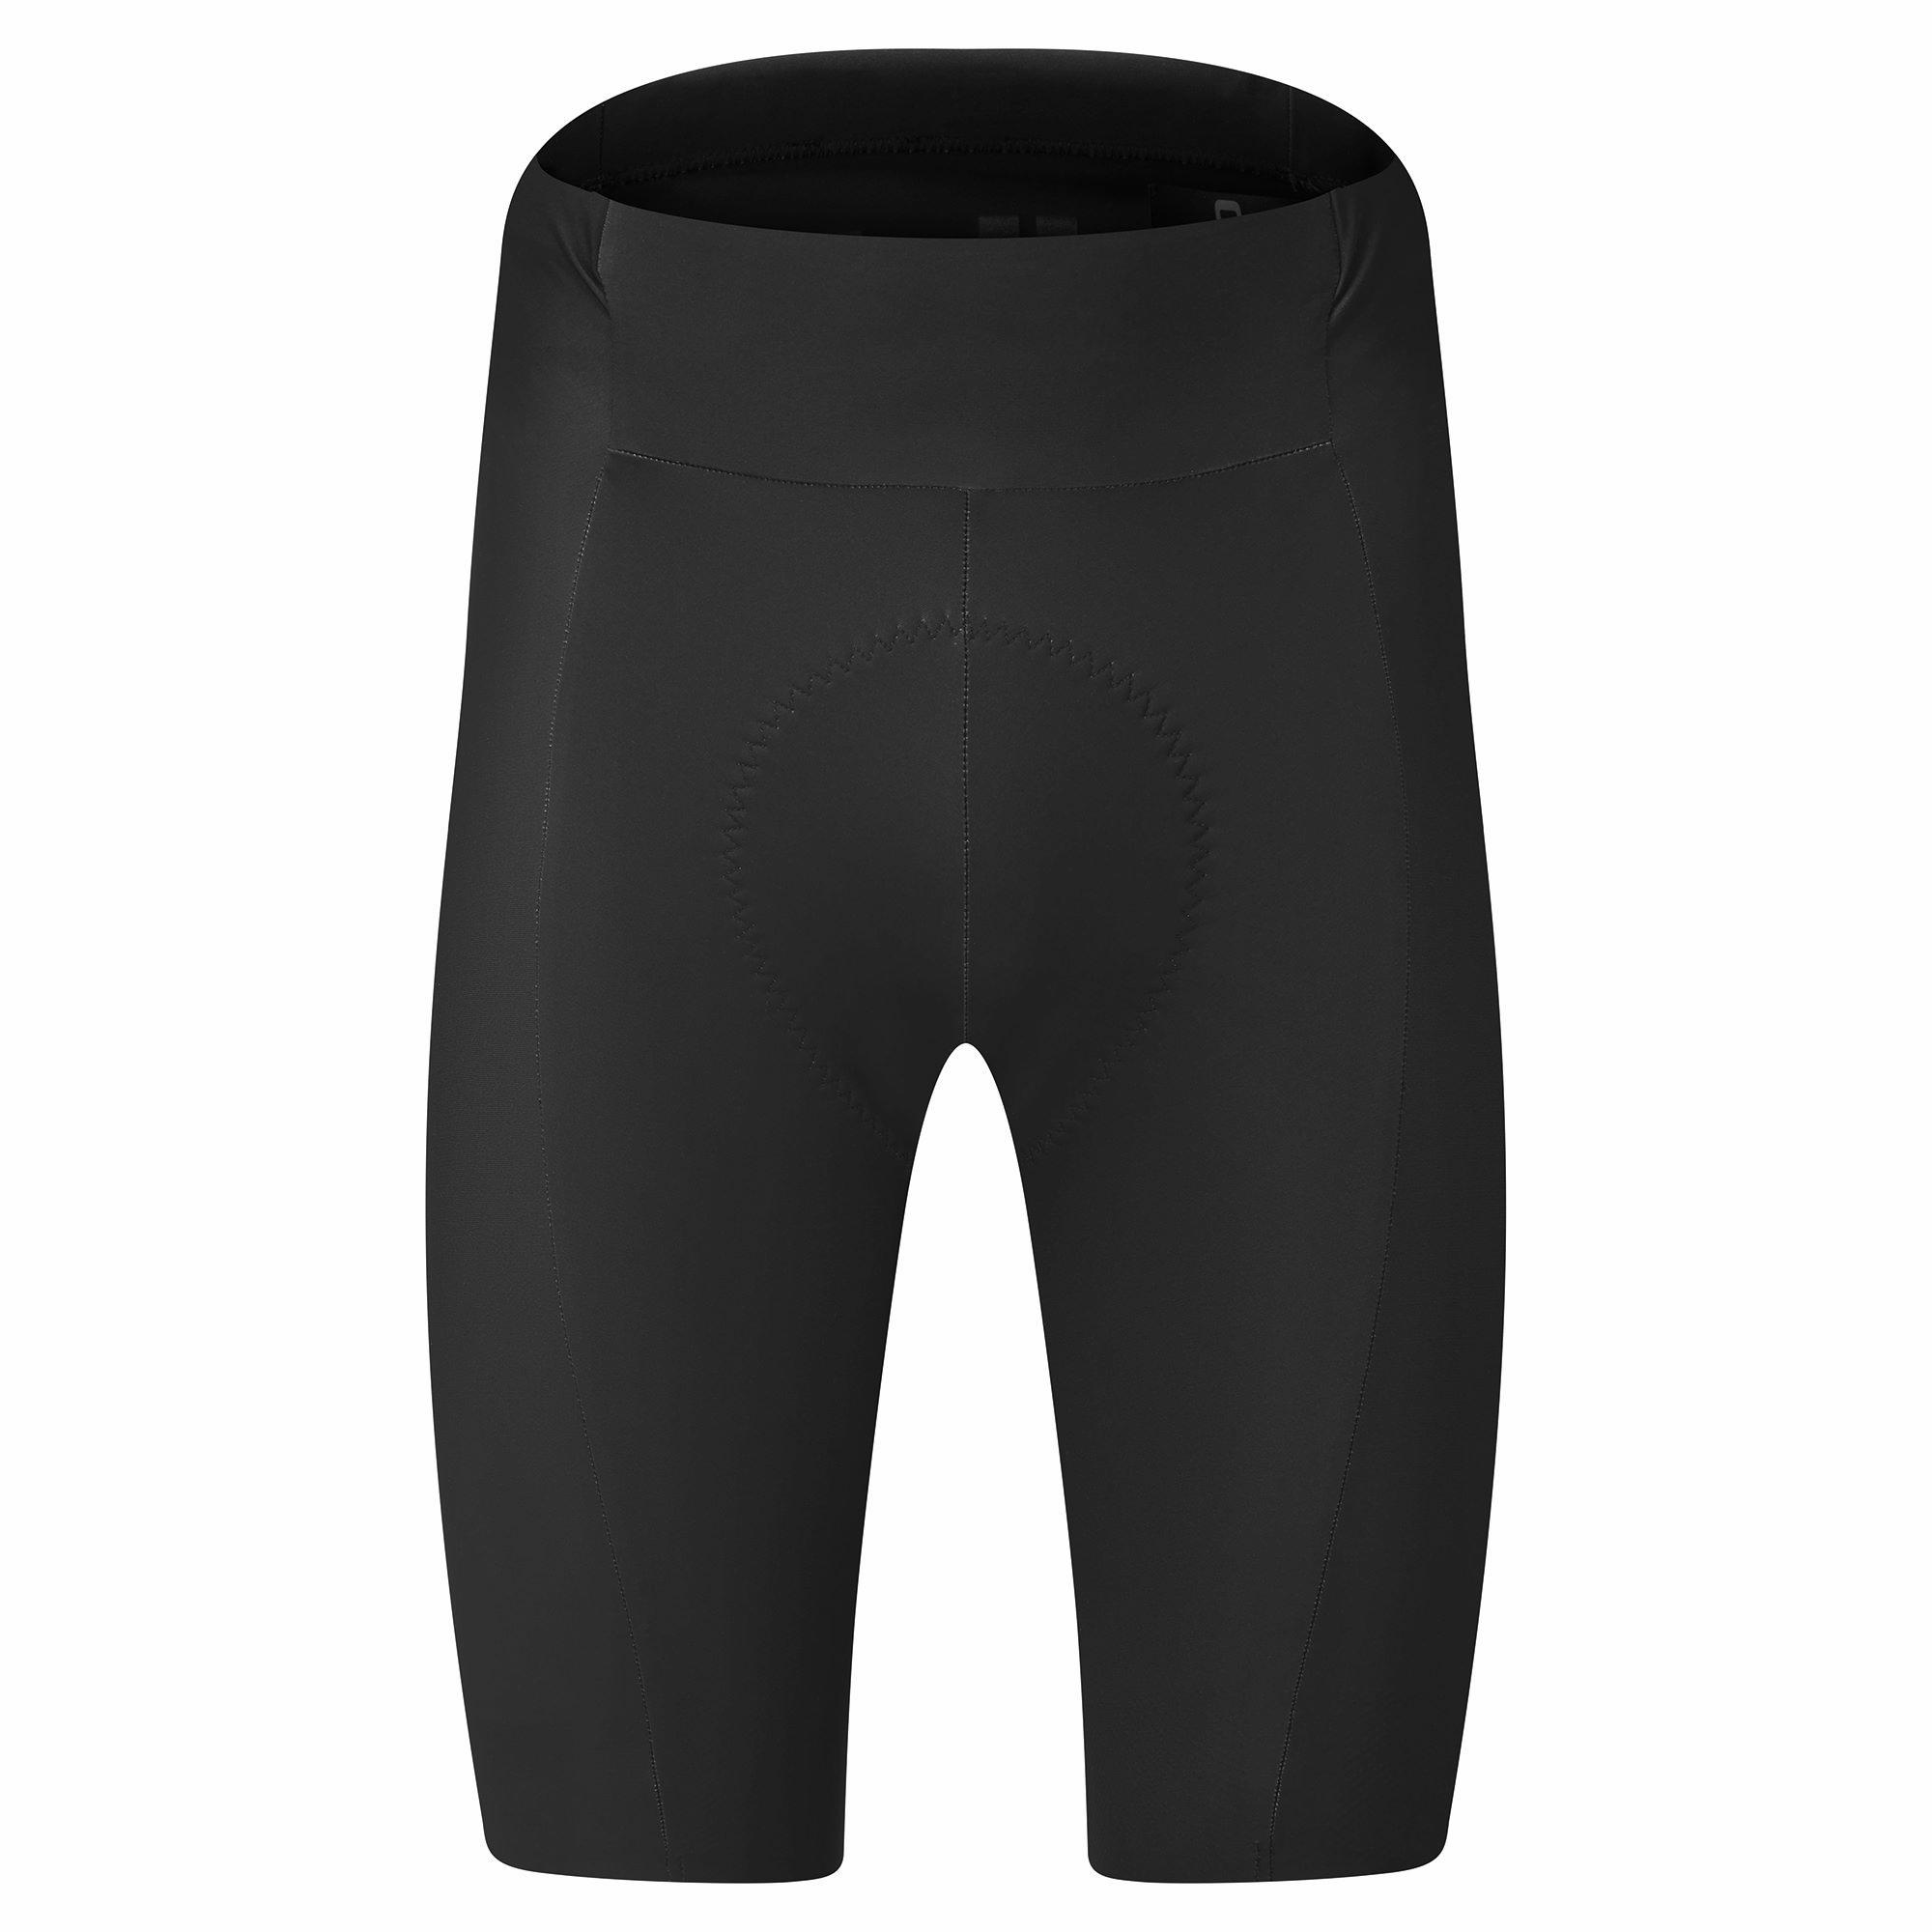 Dhb Aeron Mens Shorts 2.0 - Black/red